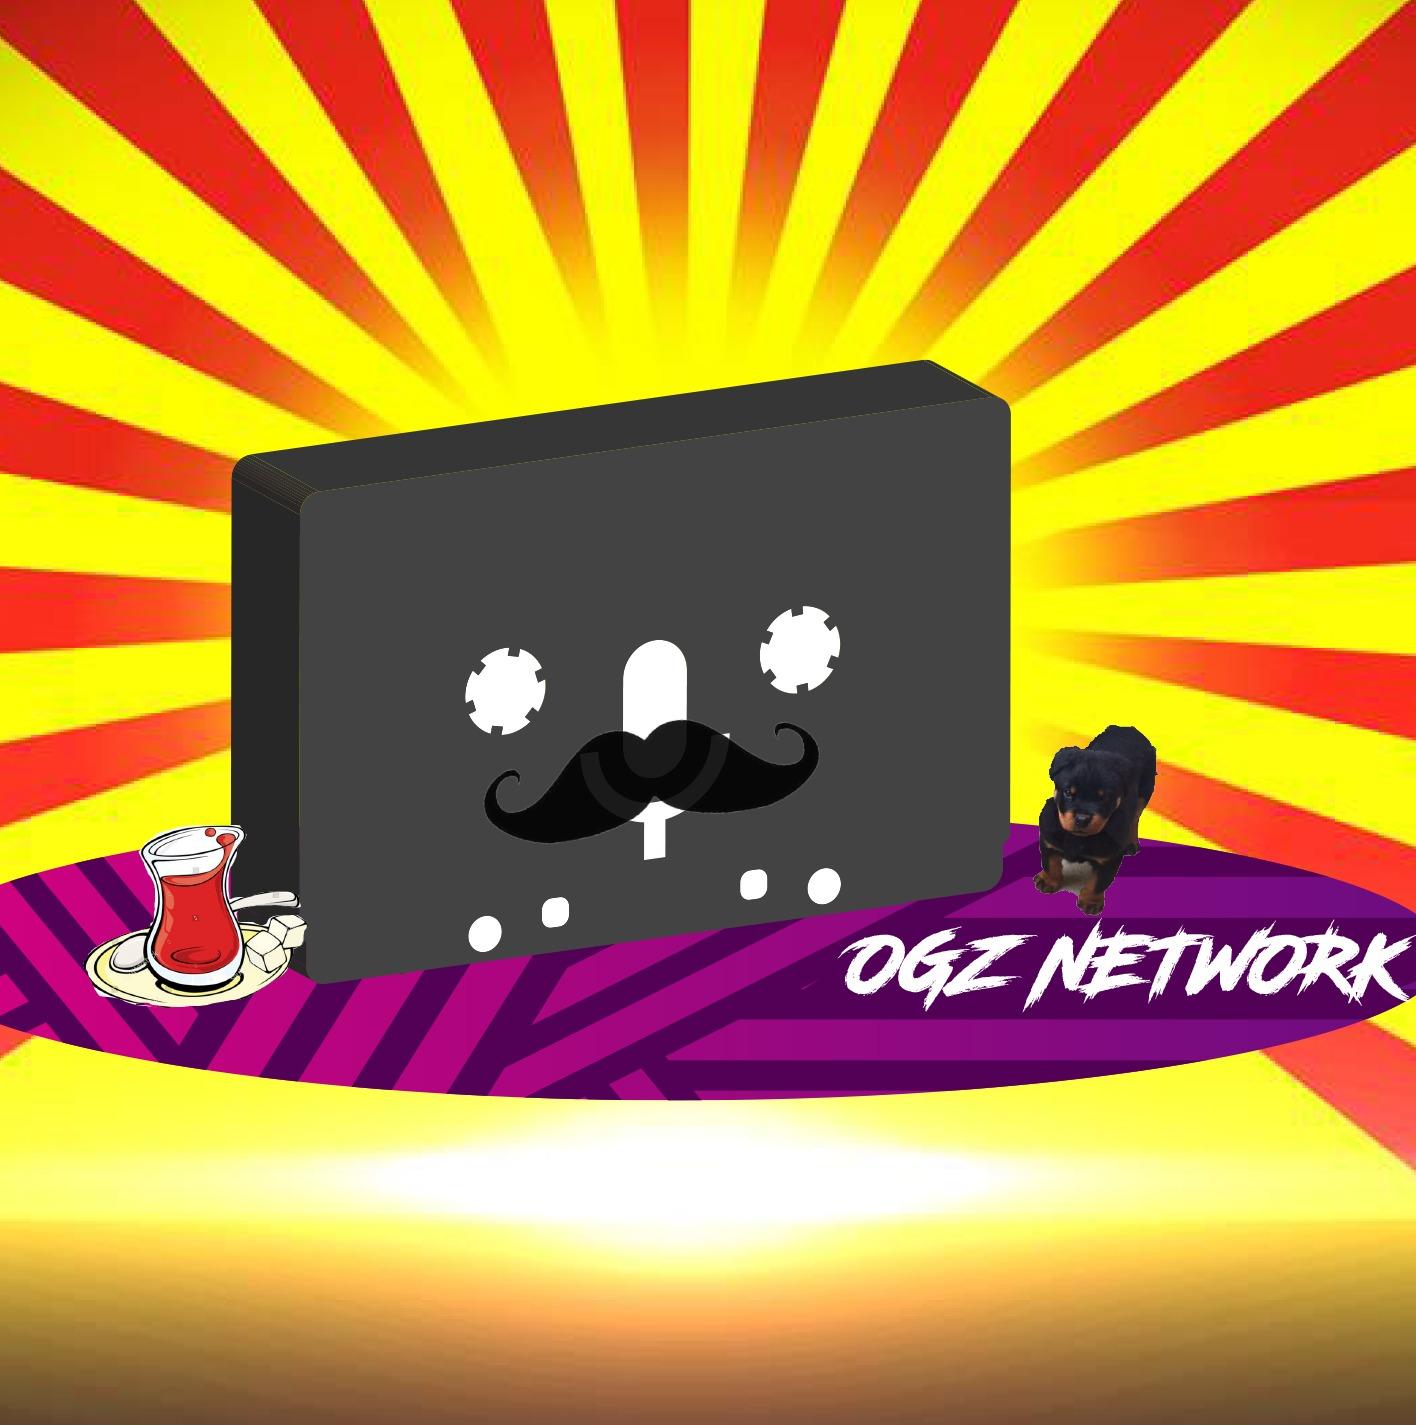 OGZ Network